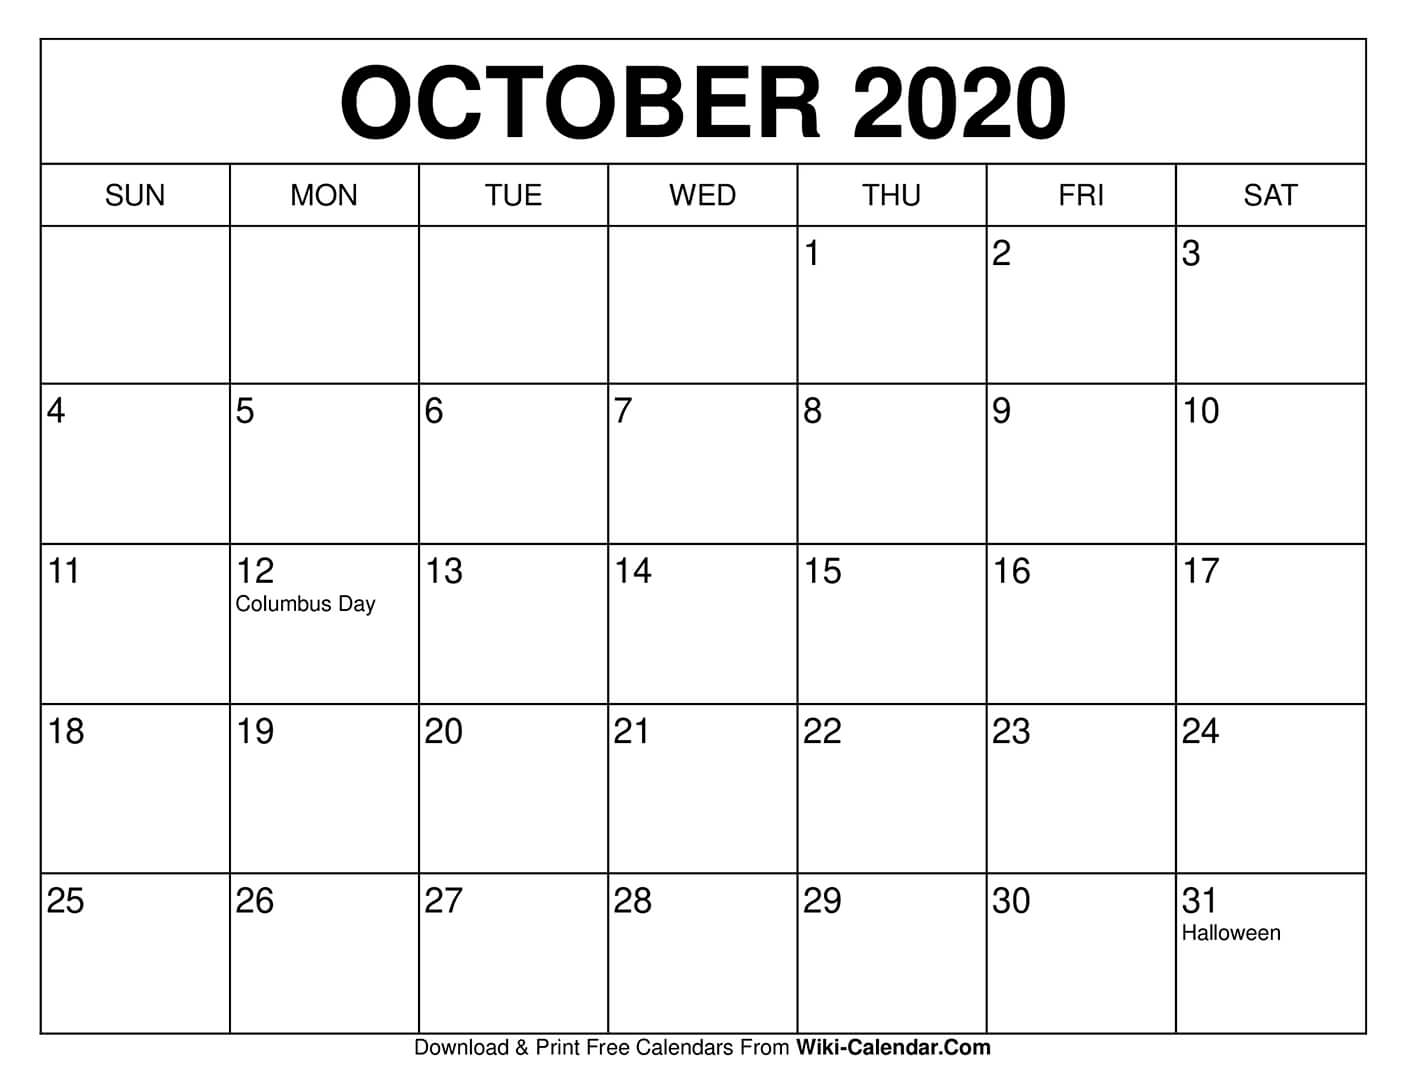 Free Printable October 2020 Calendars Wiki Calendar